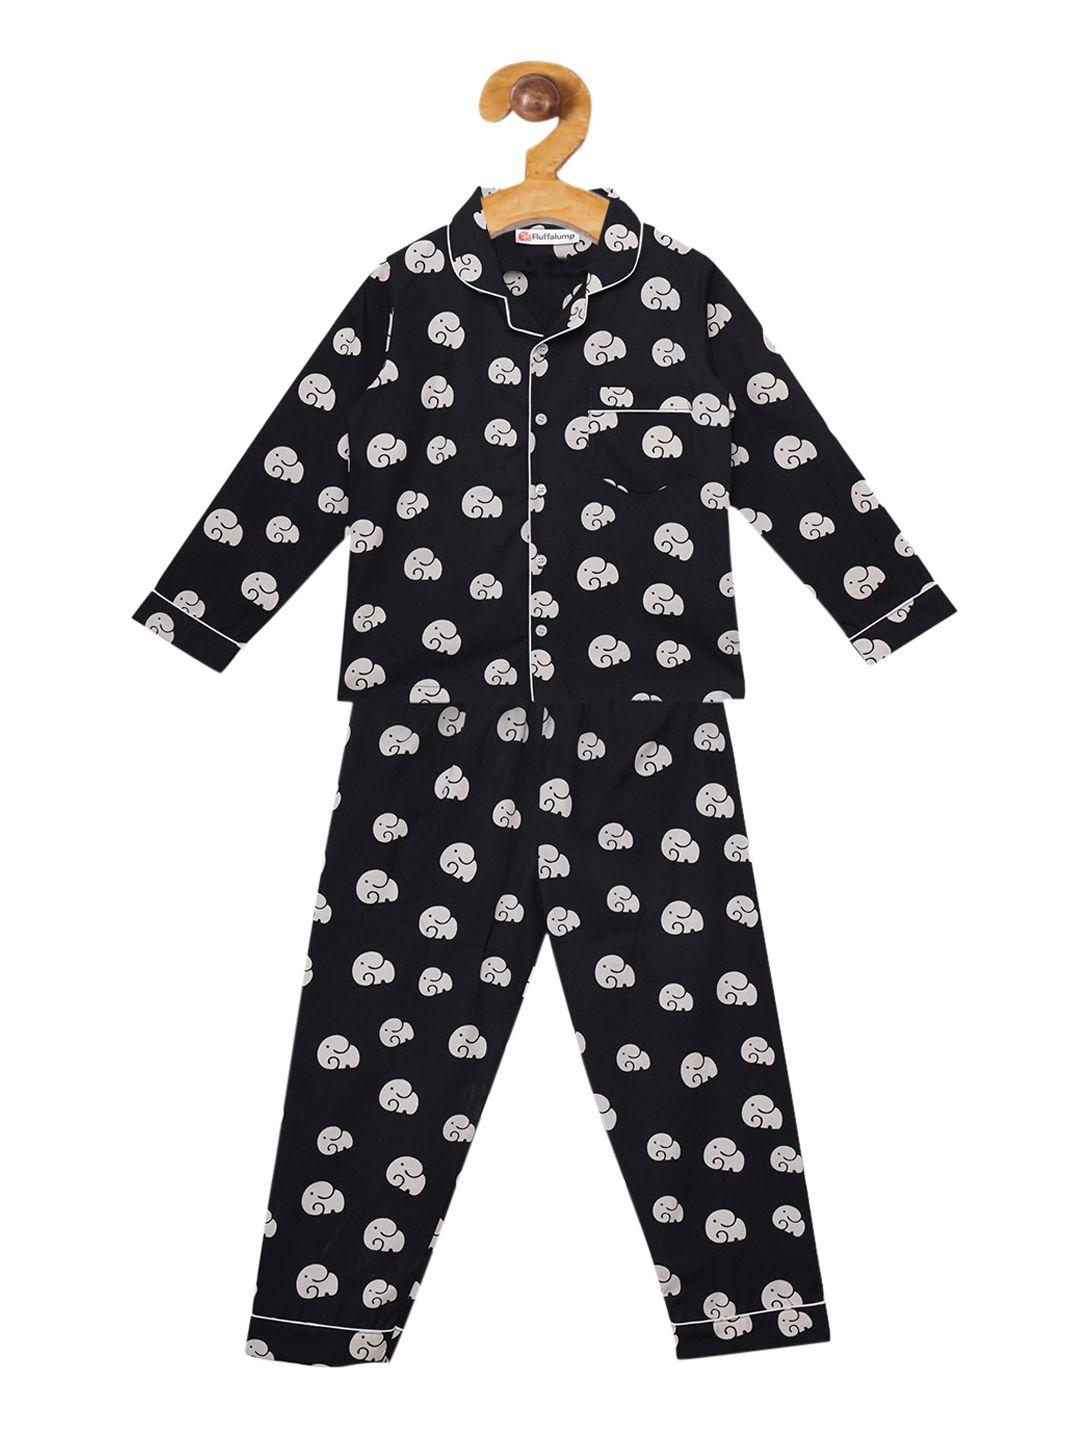 fluffalump unisex kids black & white printed night suit